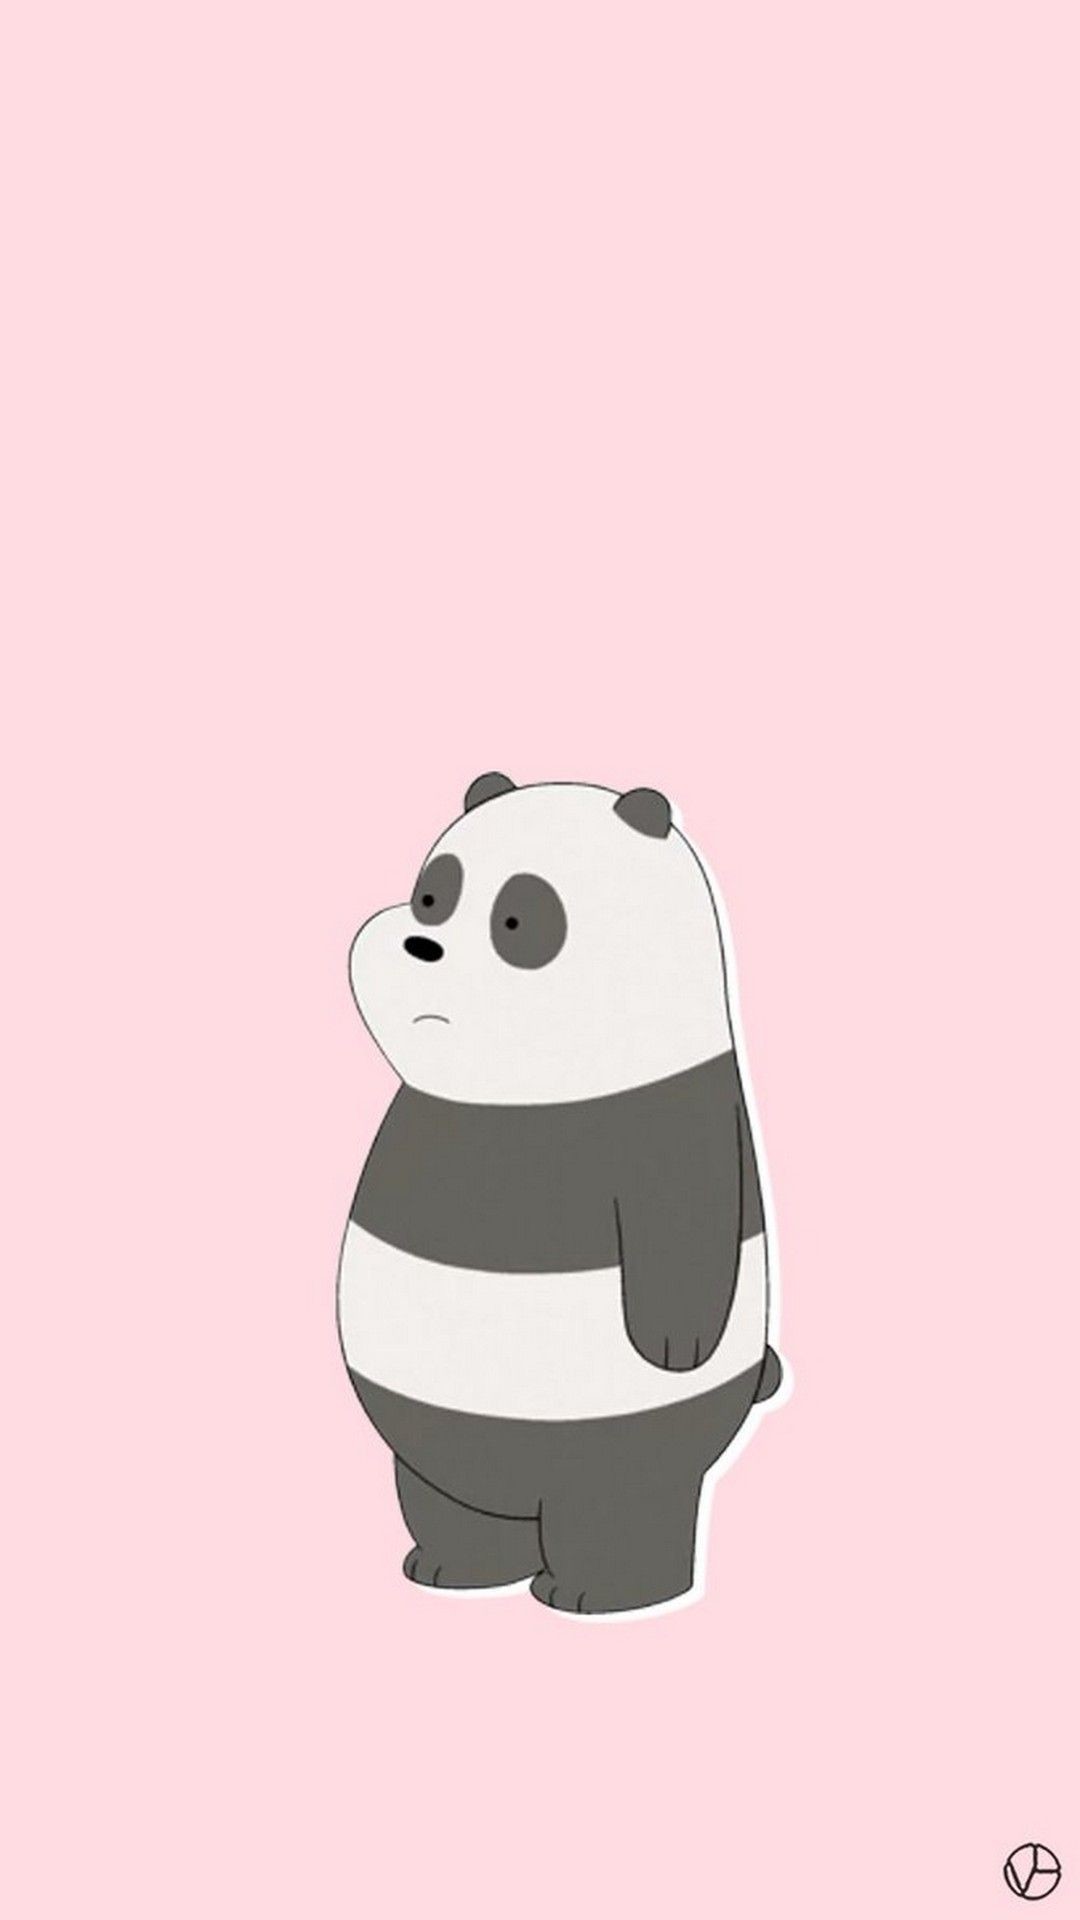 1080x1920 1920x1200 Cute Cartoon Panda Wallpaper 450x470, #92PQUKA - ModaFinilsale">